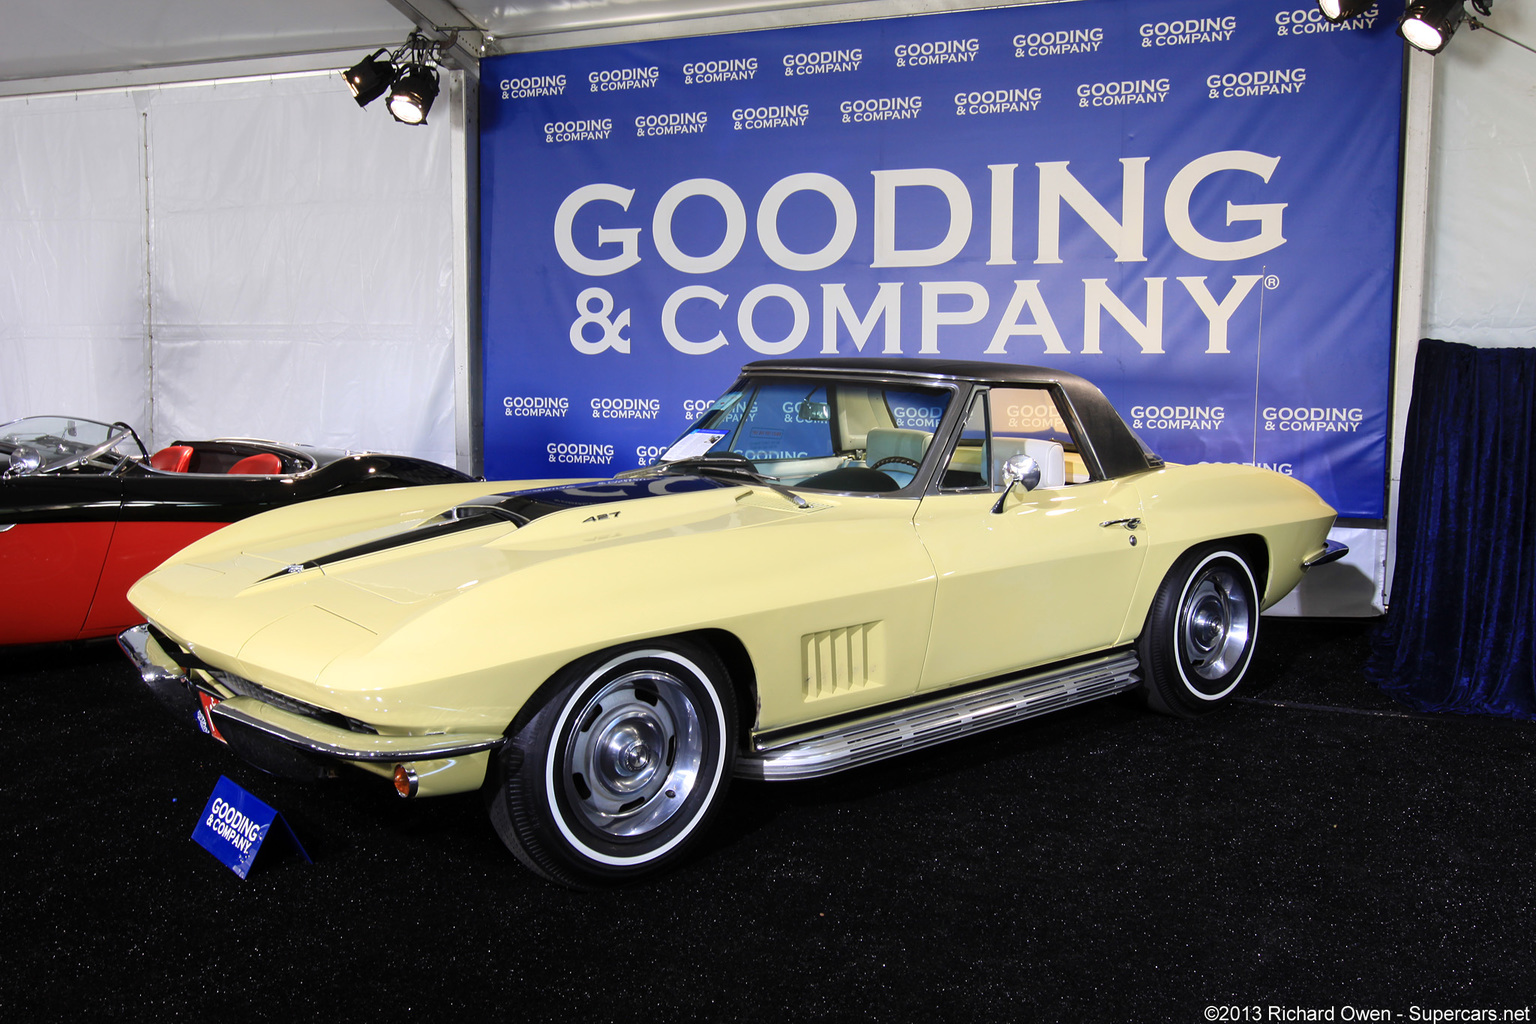 1967 Corvette Sting Ray Convertible 427 435 HP-Original Print Ad-8.5 x 11" 